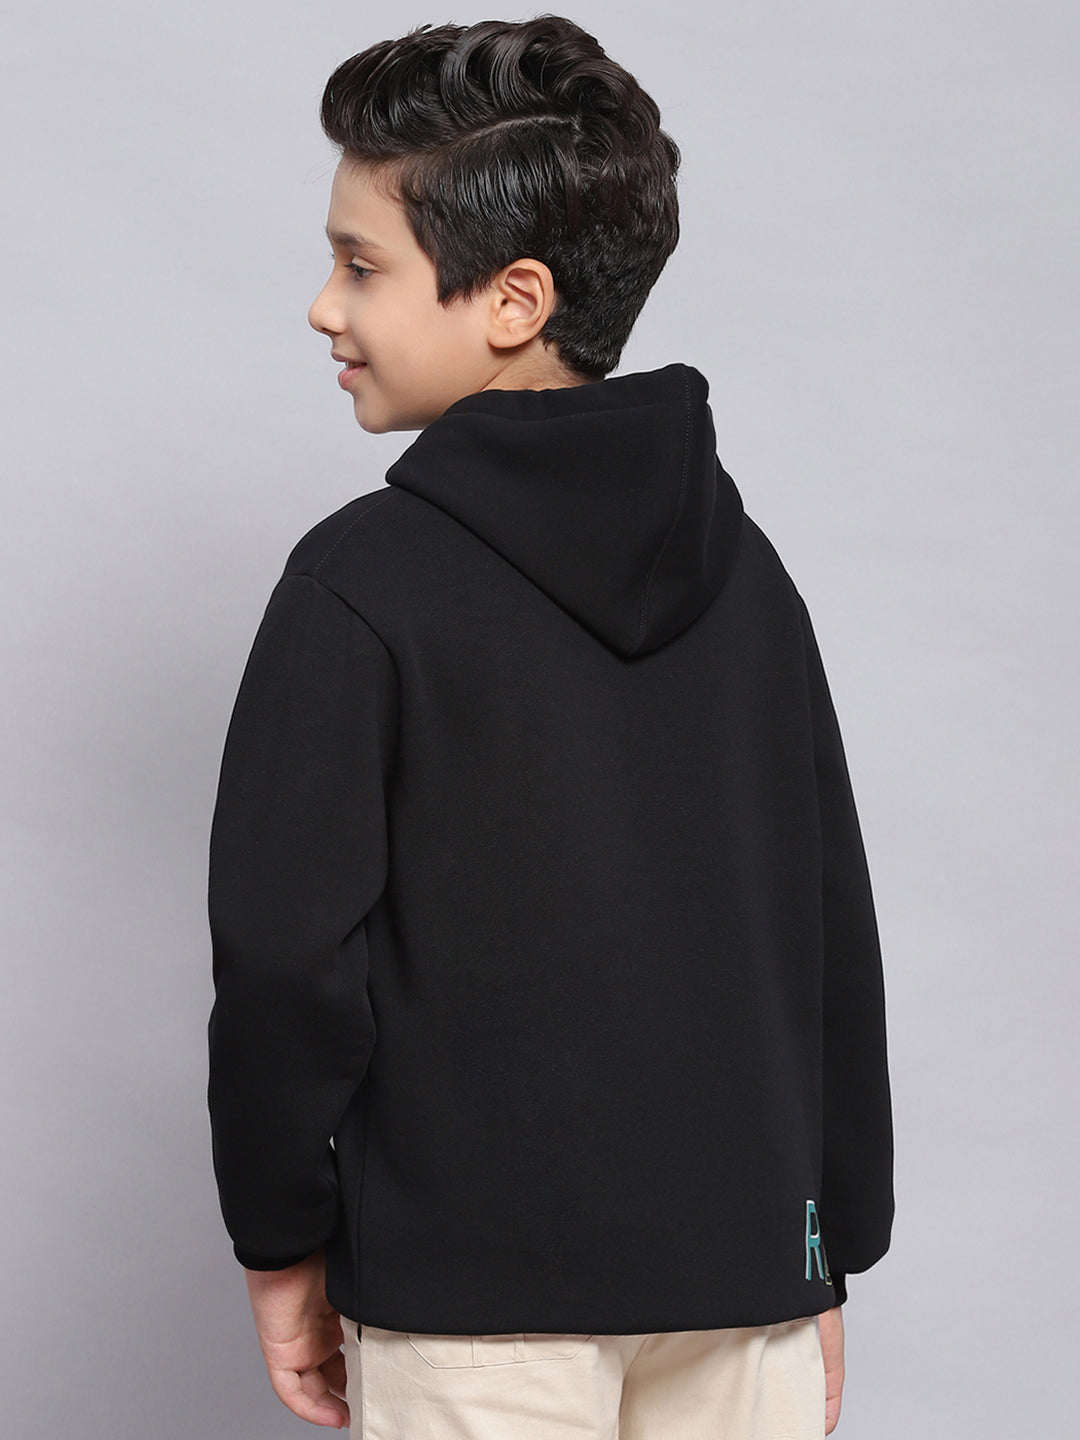 Boys Black Printed Hooded Full Sleeve Sweatshirt